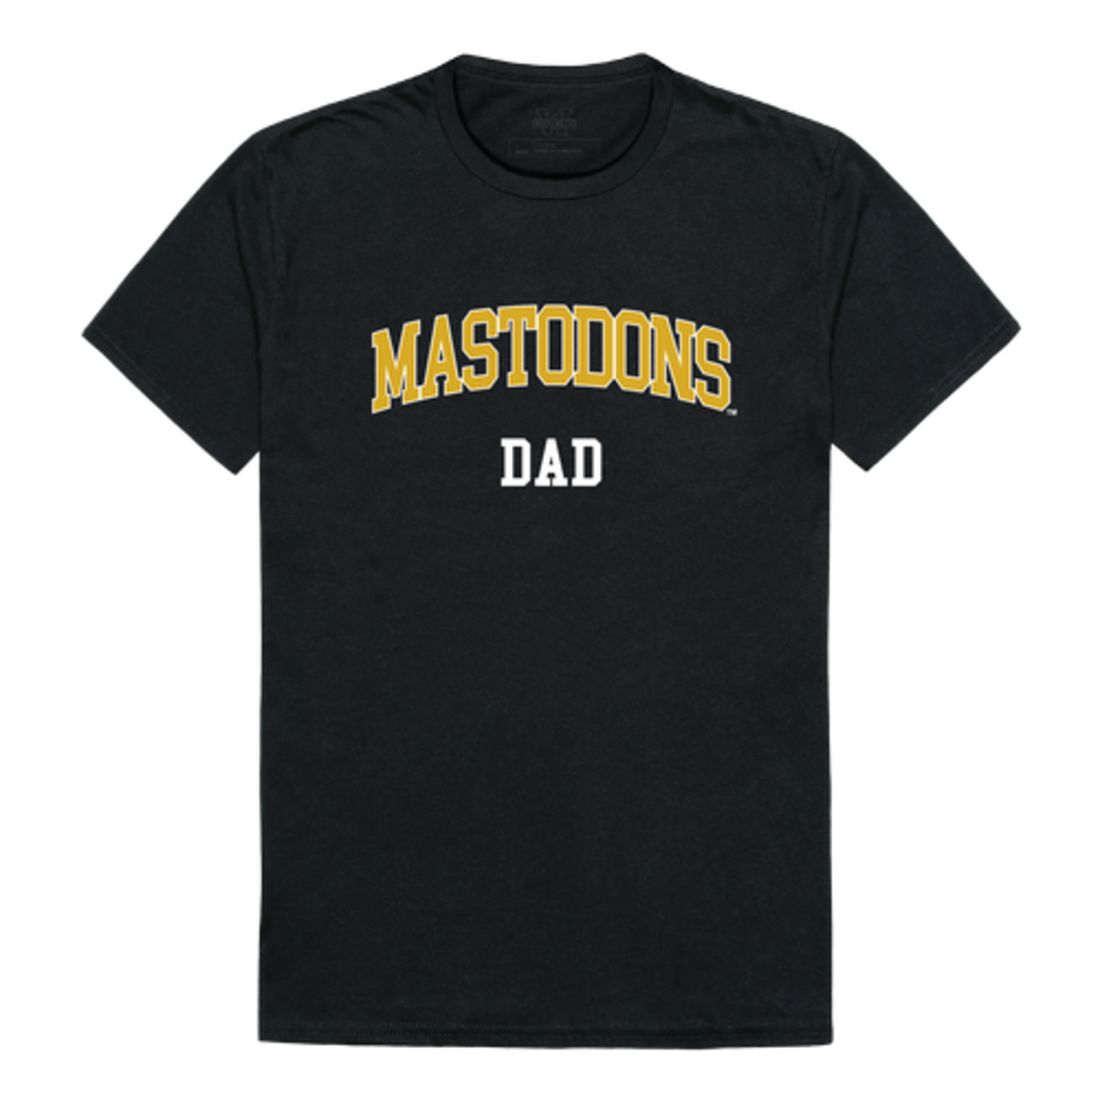 Purdue University Fort Wayne Mastodons Dad T-Shirt